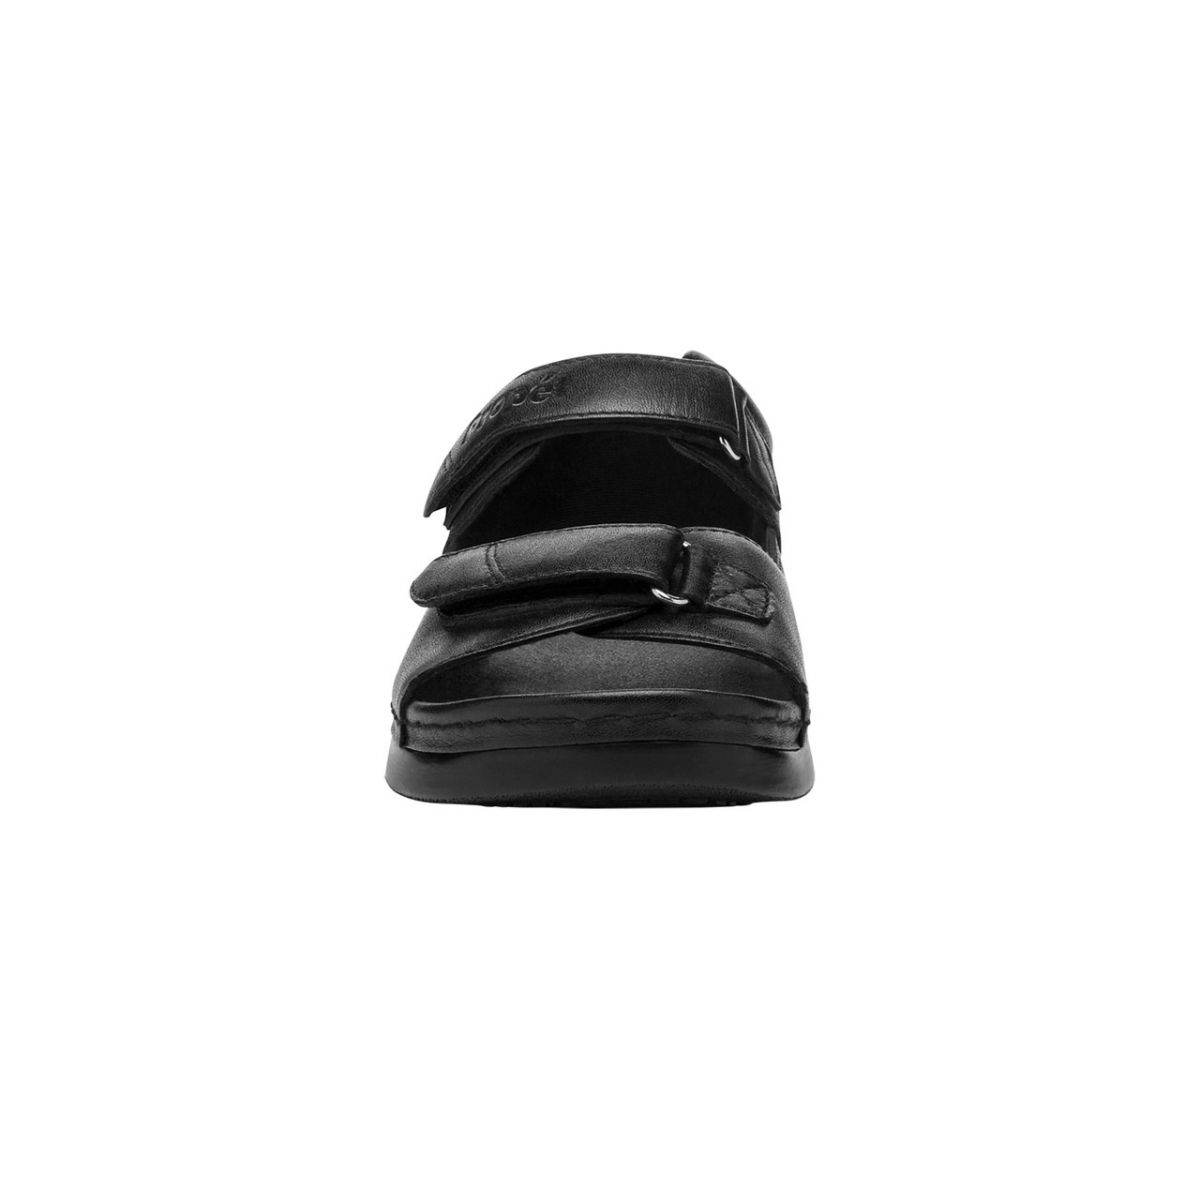 Propet Women's Pedic Walker Sandal Black - W0089B BLACK - BLACK, 7.5 X-Wide